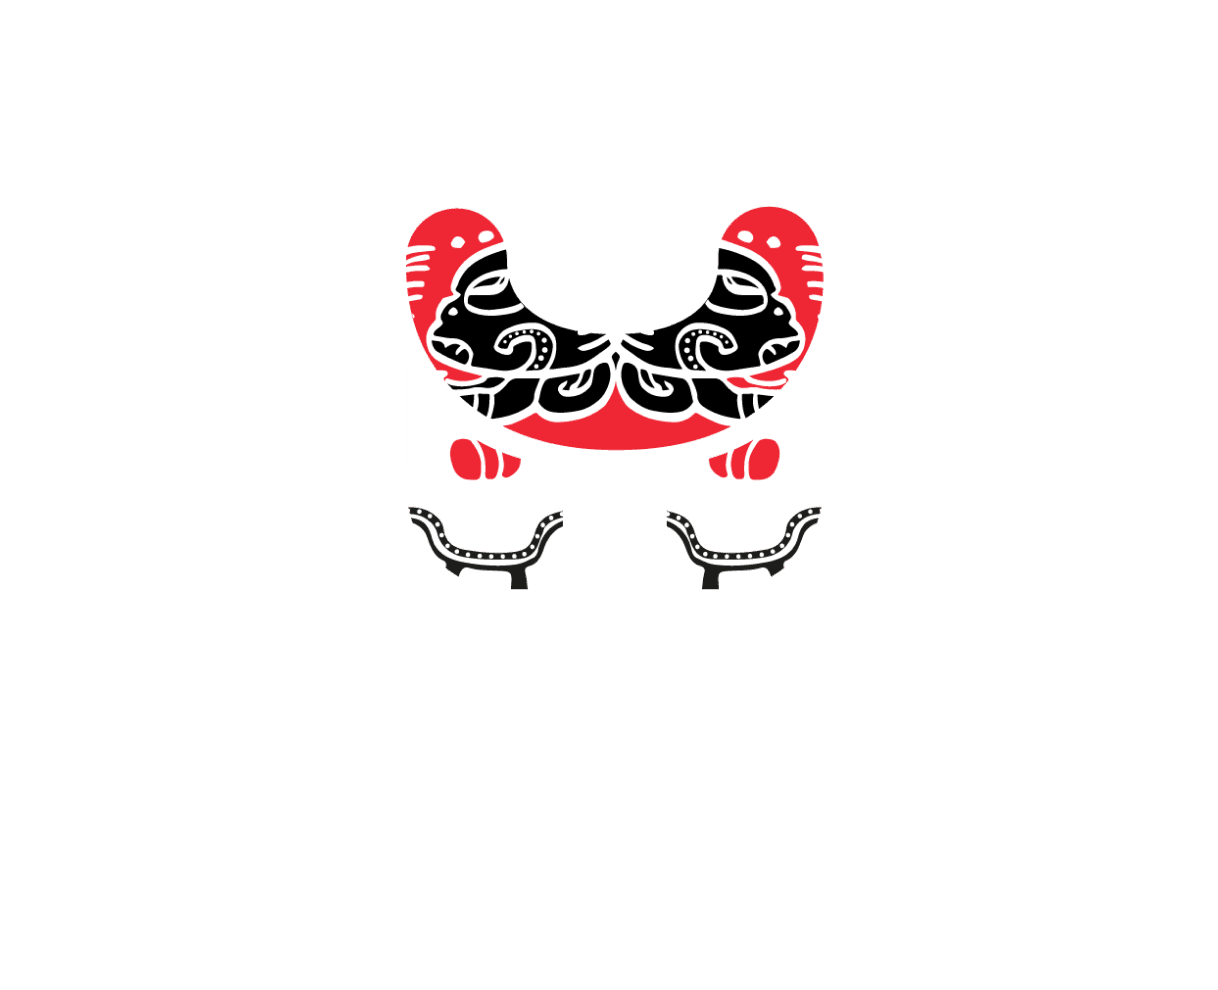 Maiz and cacao logo footer